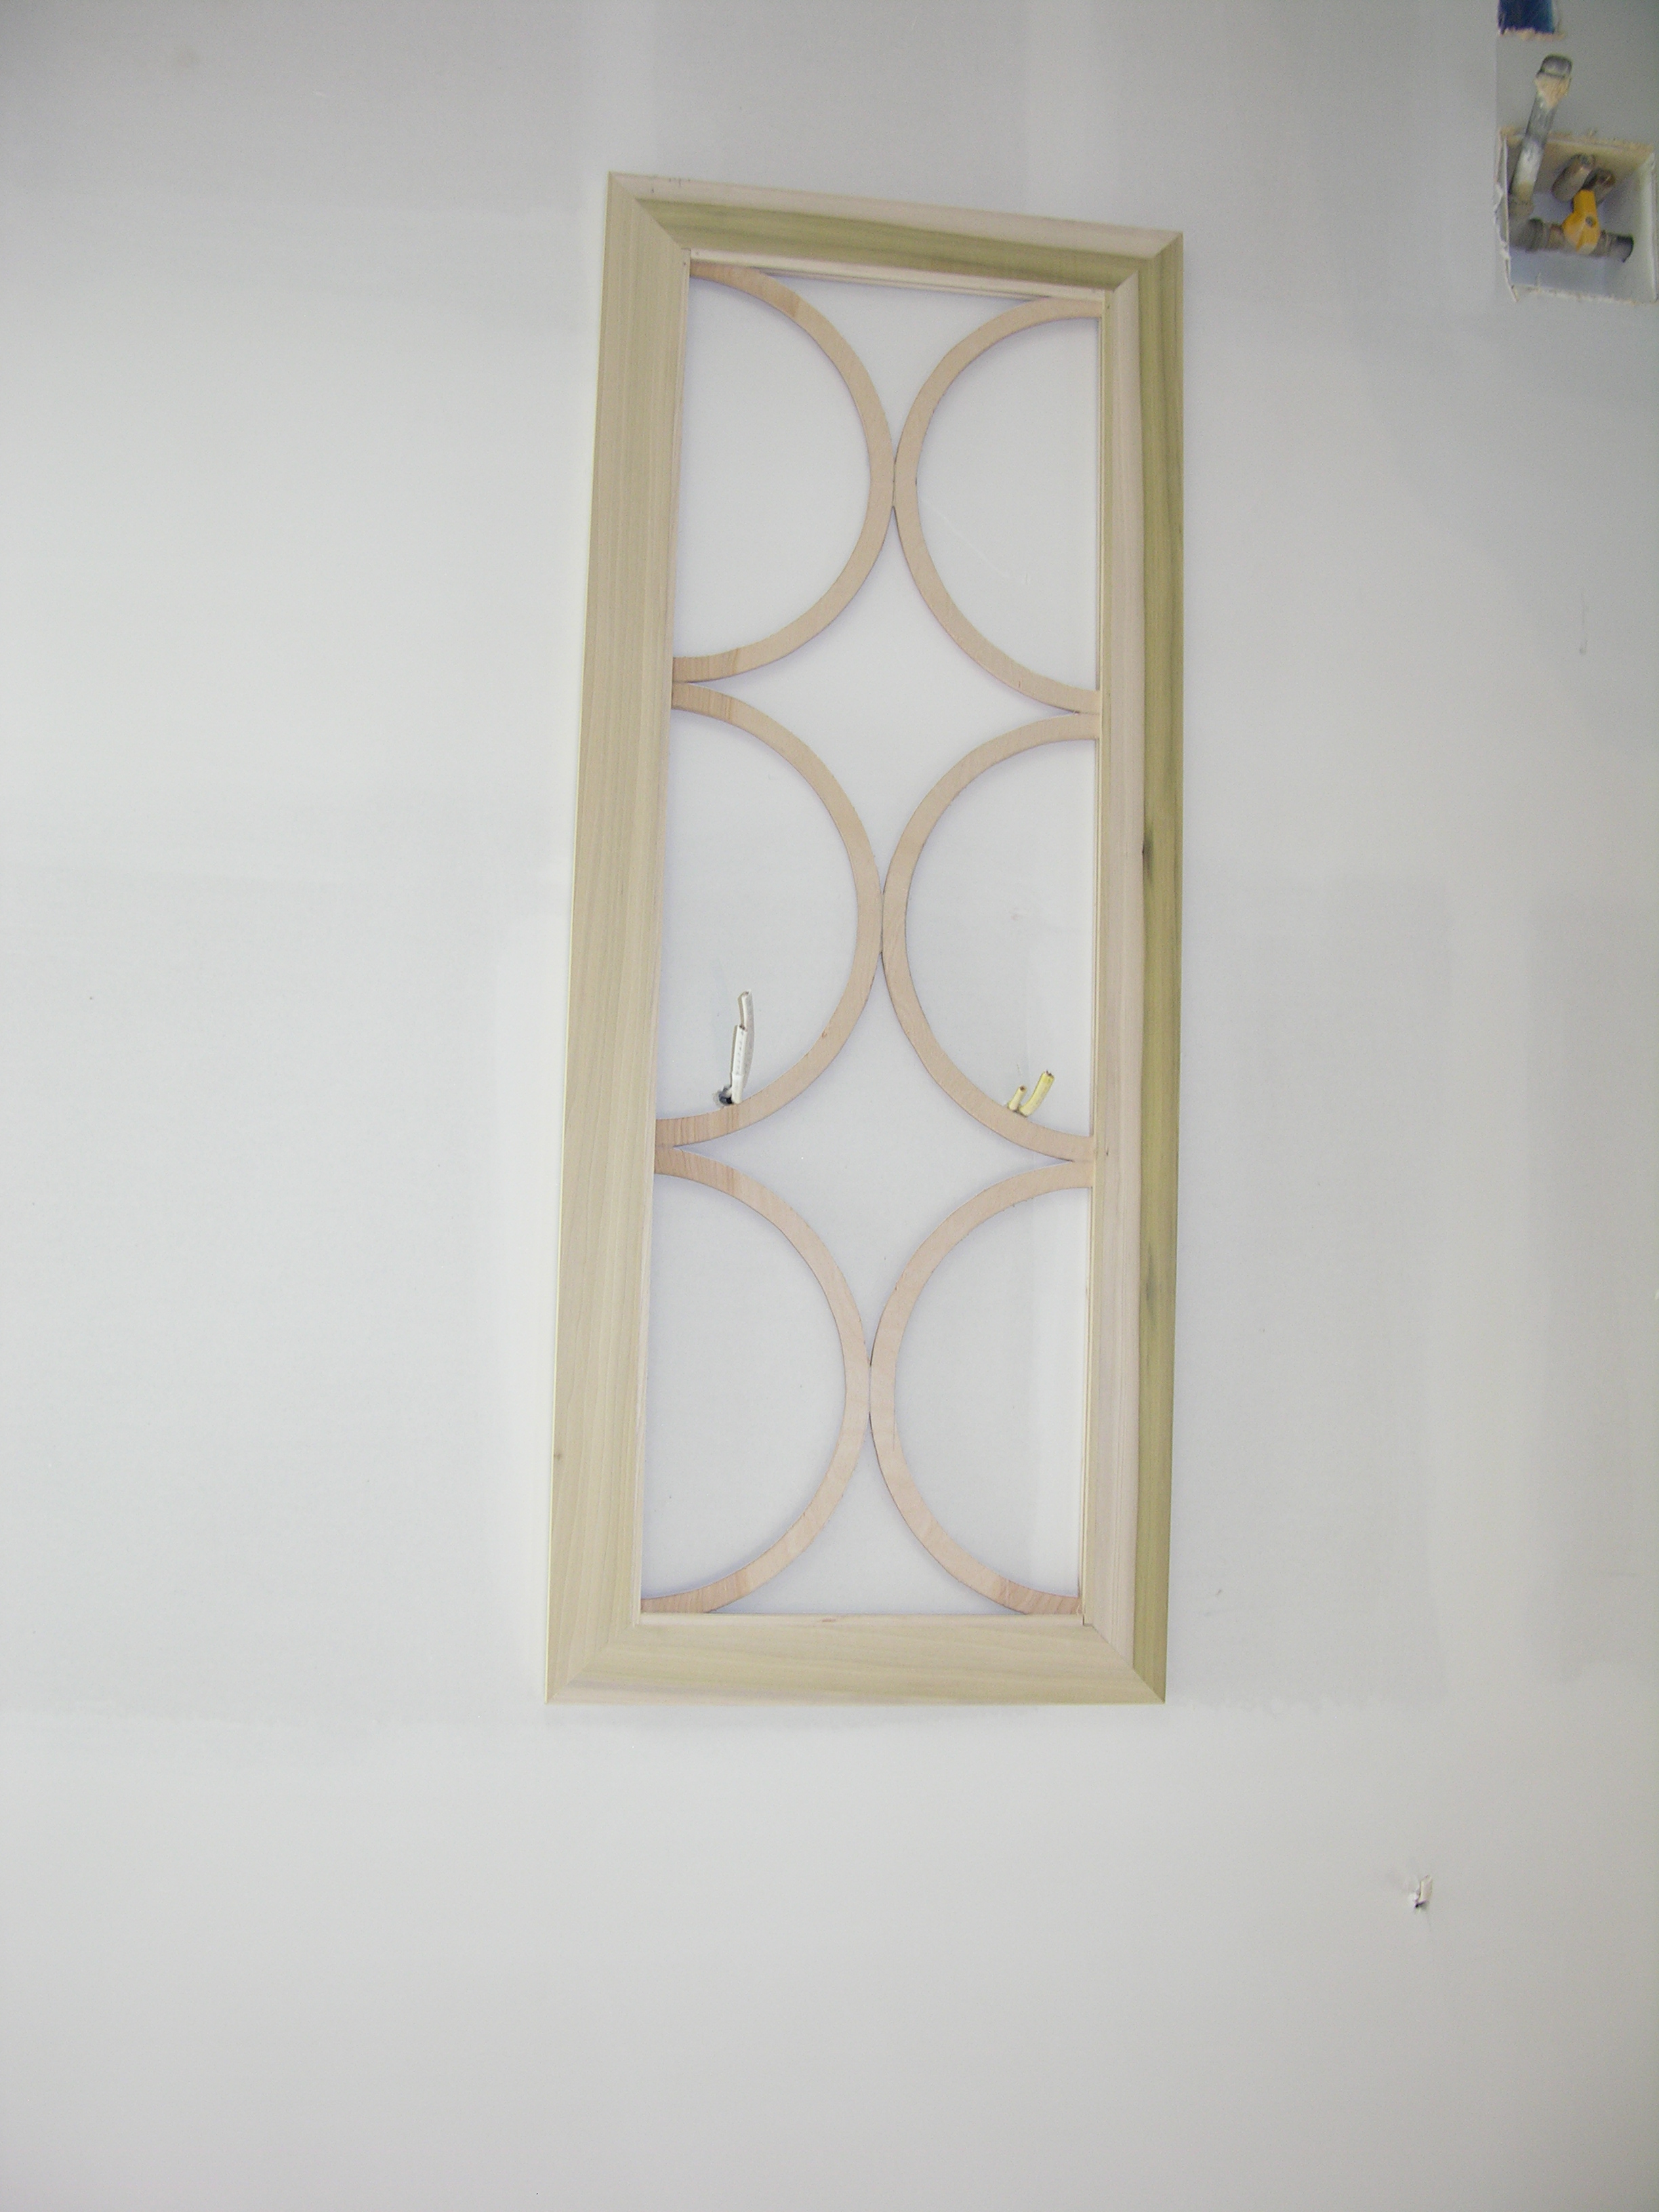 Woodworking Plans Linen Cabinet PDF Download diy wood decor 